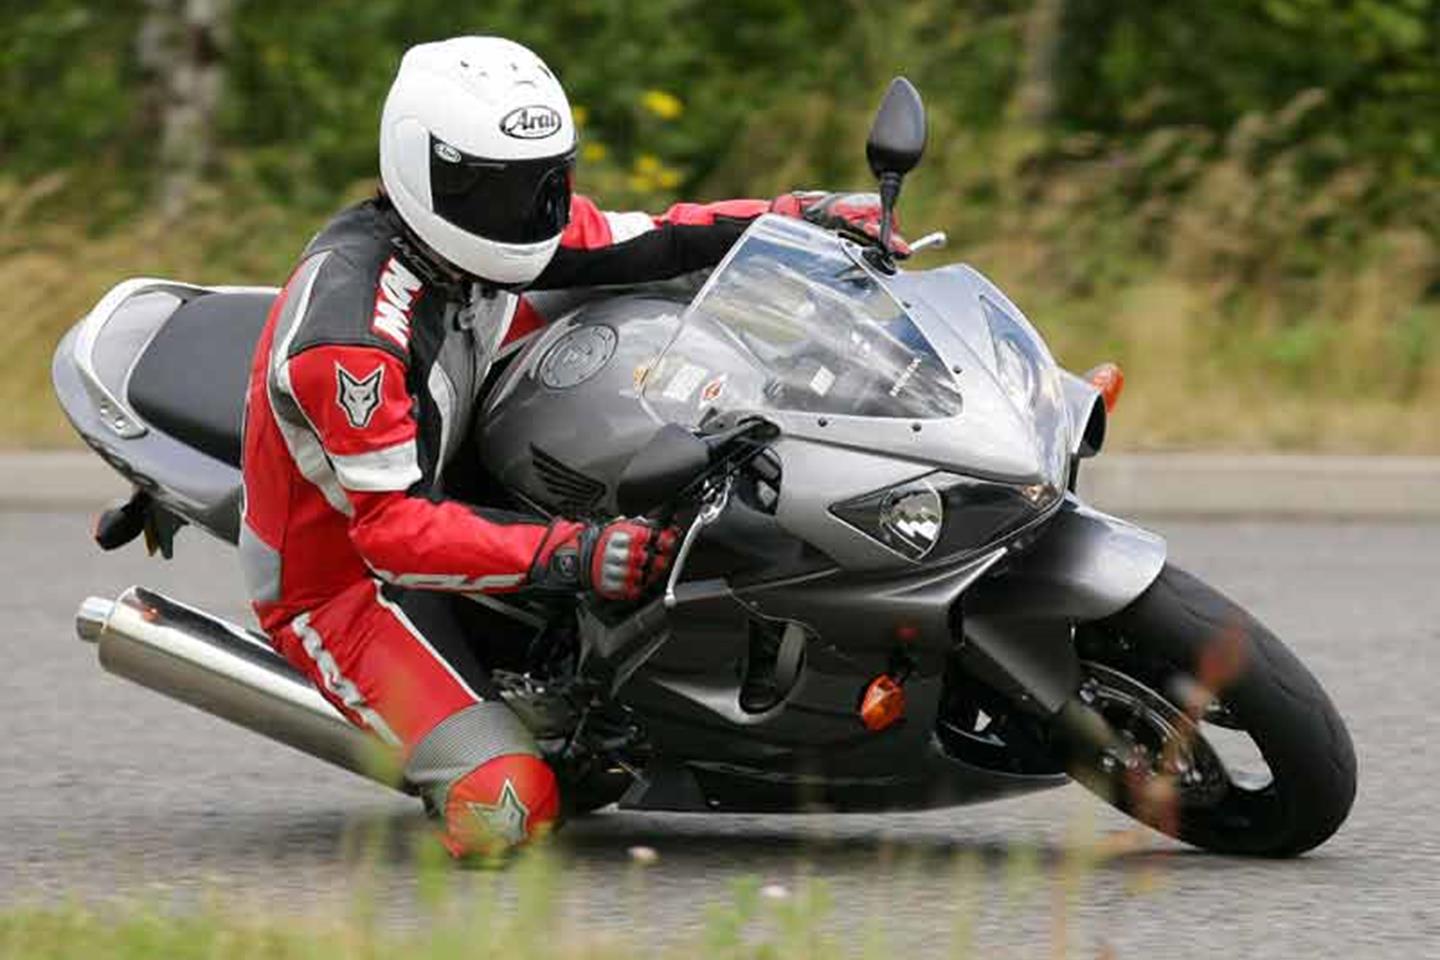 CBR 600 F4i 2005 Moto GP Paddock Rain Cover for sale online 